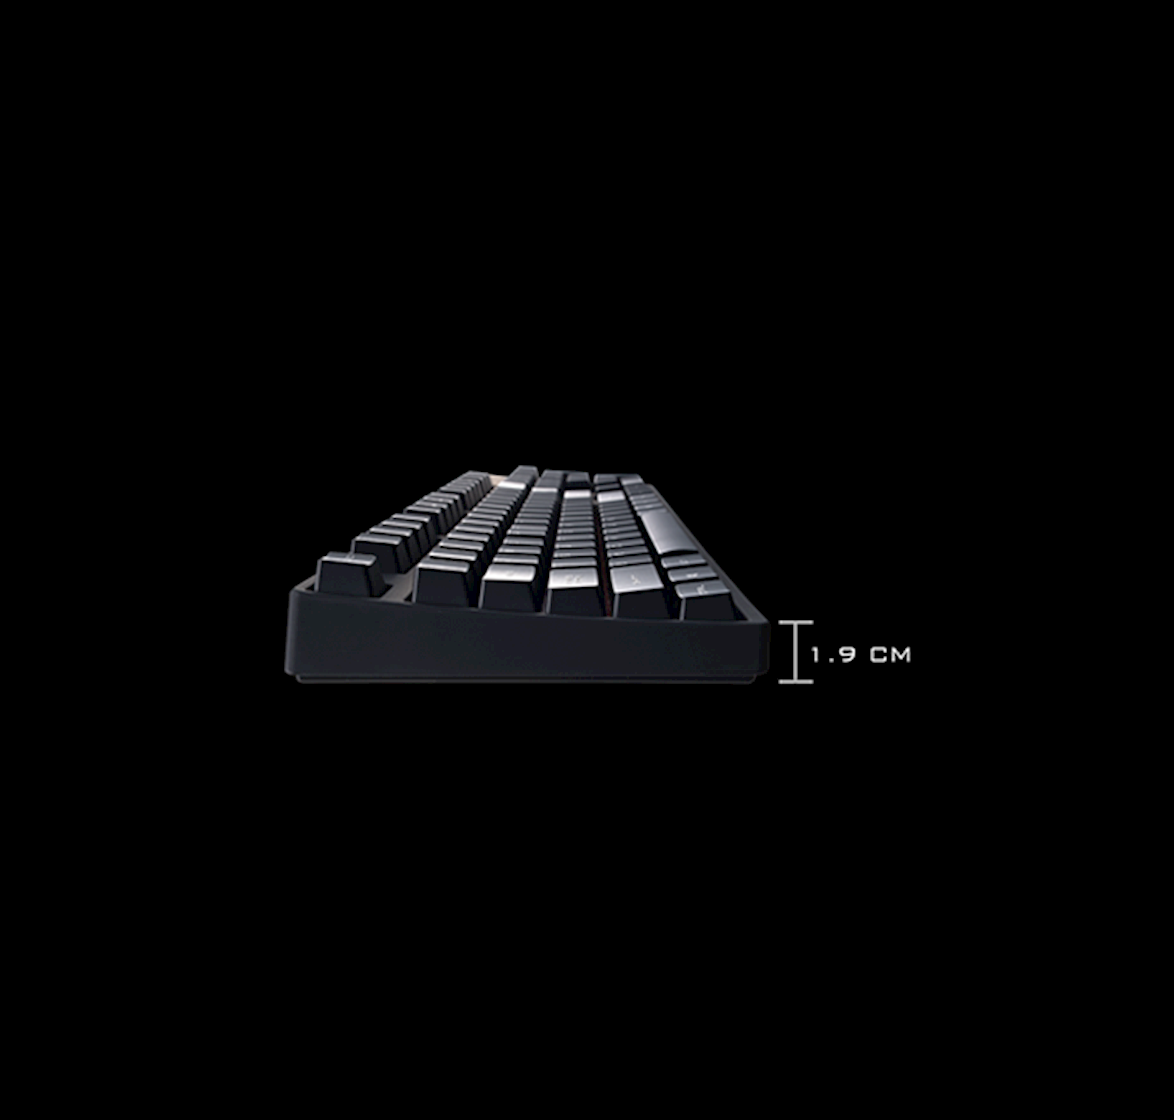 Slim keyboard body- ergonomic typing angles